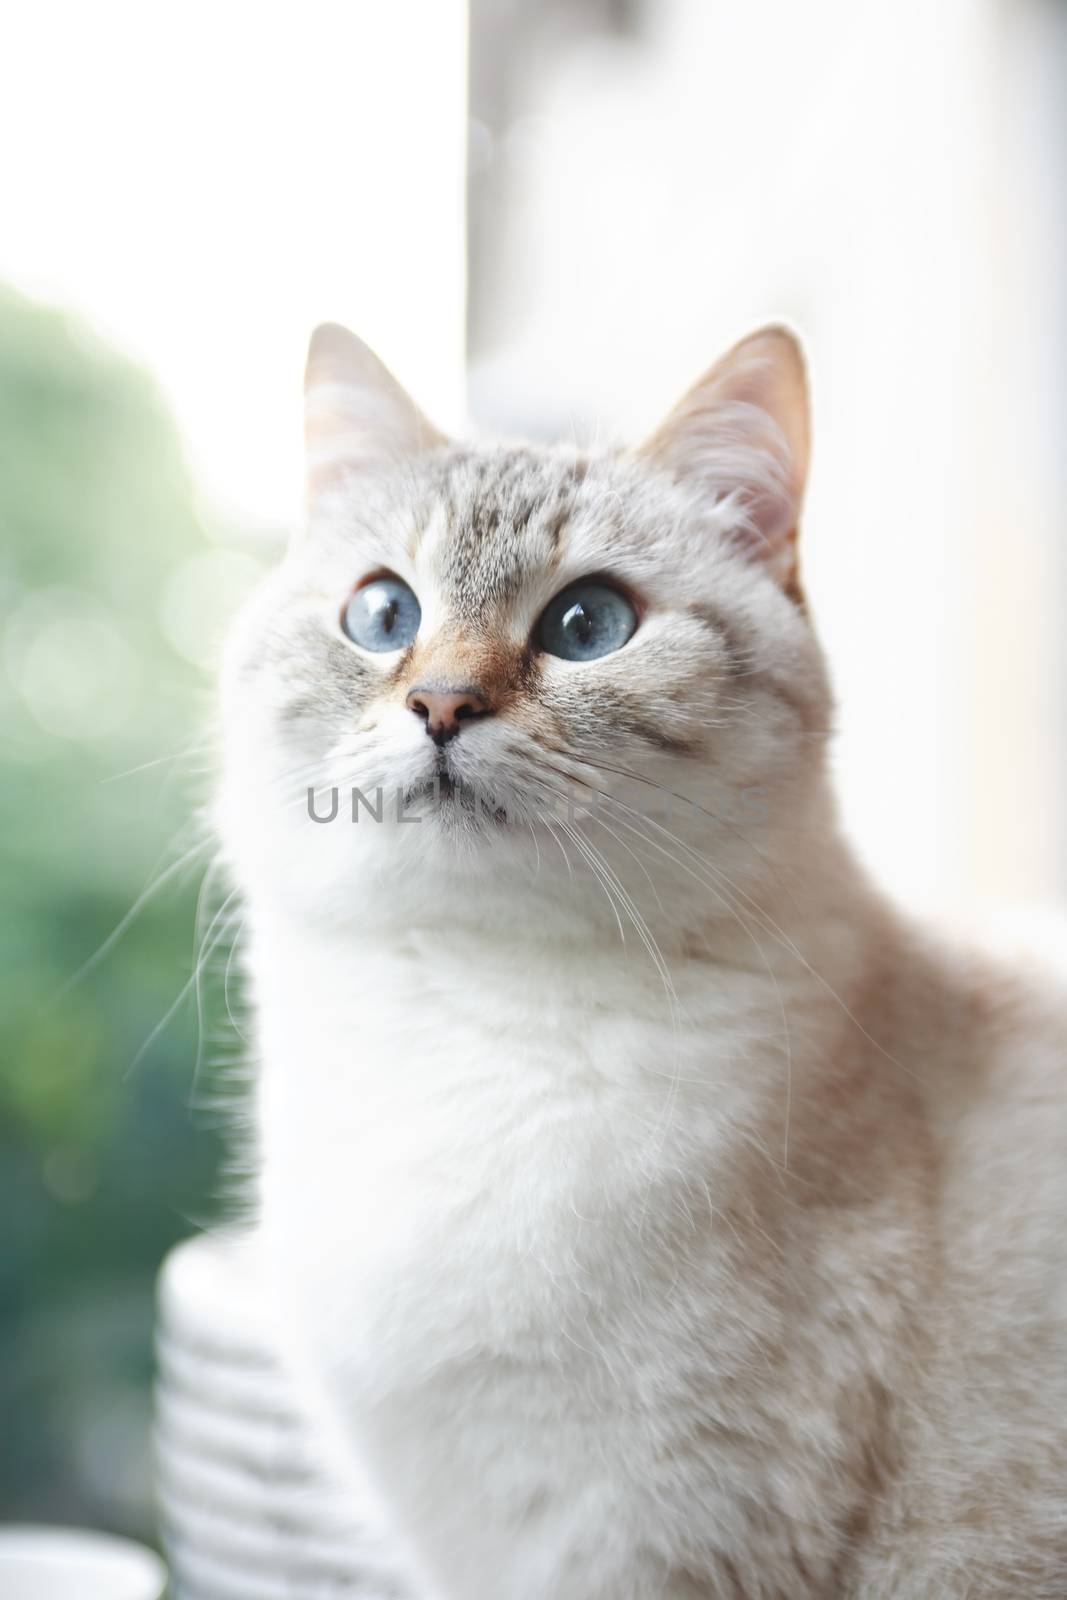 Beautiful domestic gray cat closeup portrait against blur background